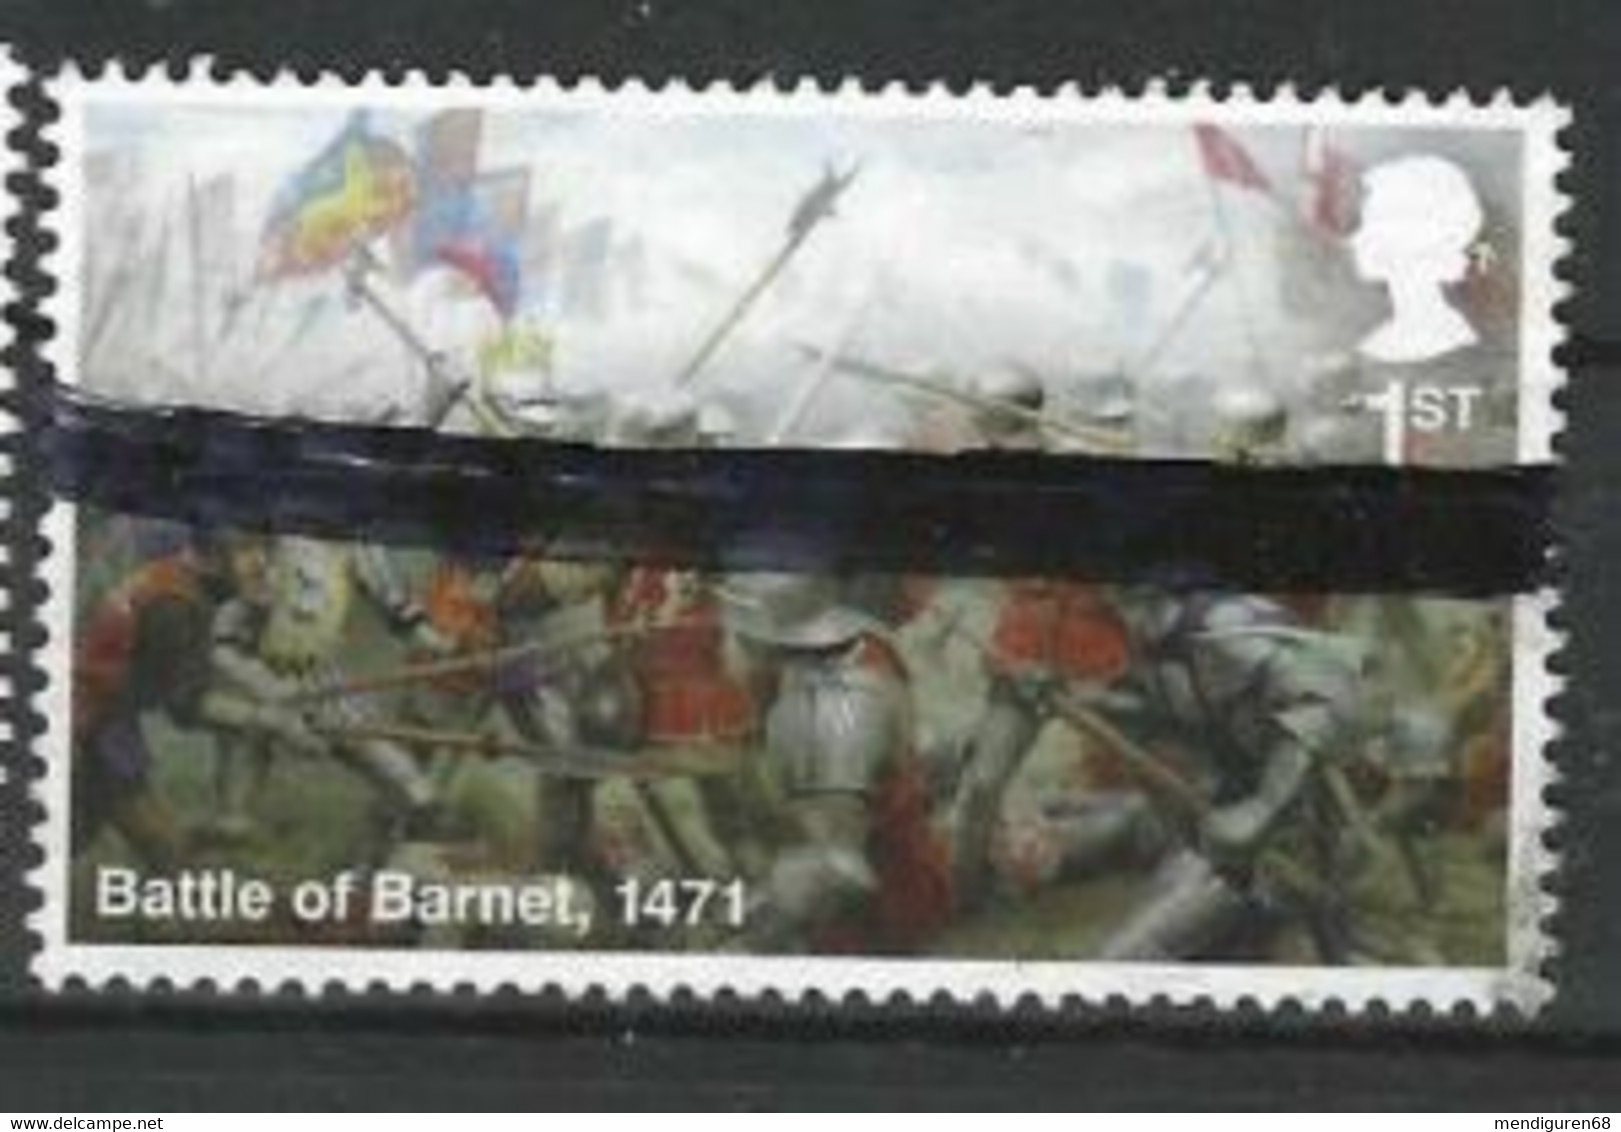 GROSSBRITANNIEN GRANDE BRETAGNE GB 2021 THE WARS OF THE ROSES: Battle Of BARNE 1471 USED SG 451 MI 4761 YT 5175 SC 4101 - Usati